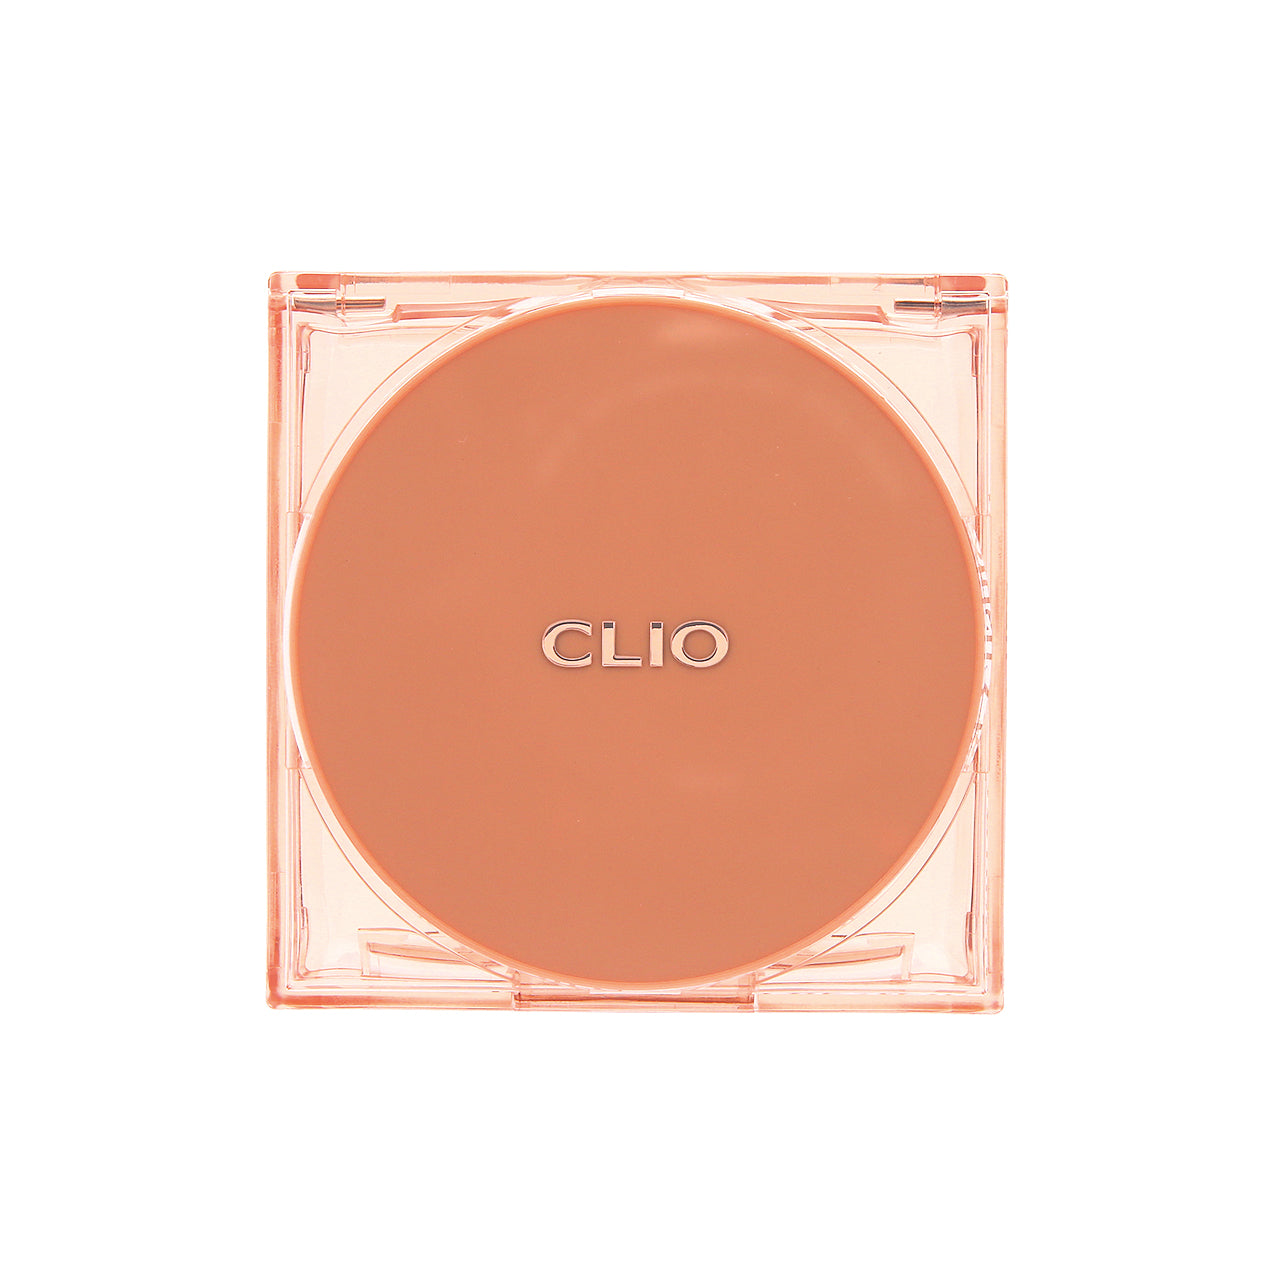 Clio Upgraded Magic Ultimate Long Lasting Flawless Cushion Foundation Koshort Limited Edition 03 Natural Brightening 15g x 2pcs | Sasa Global eShop